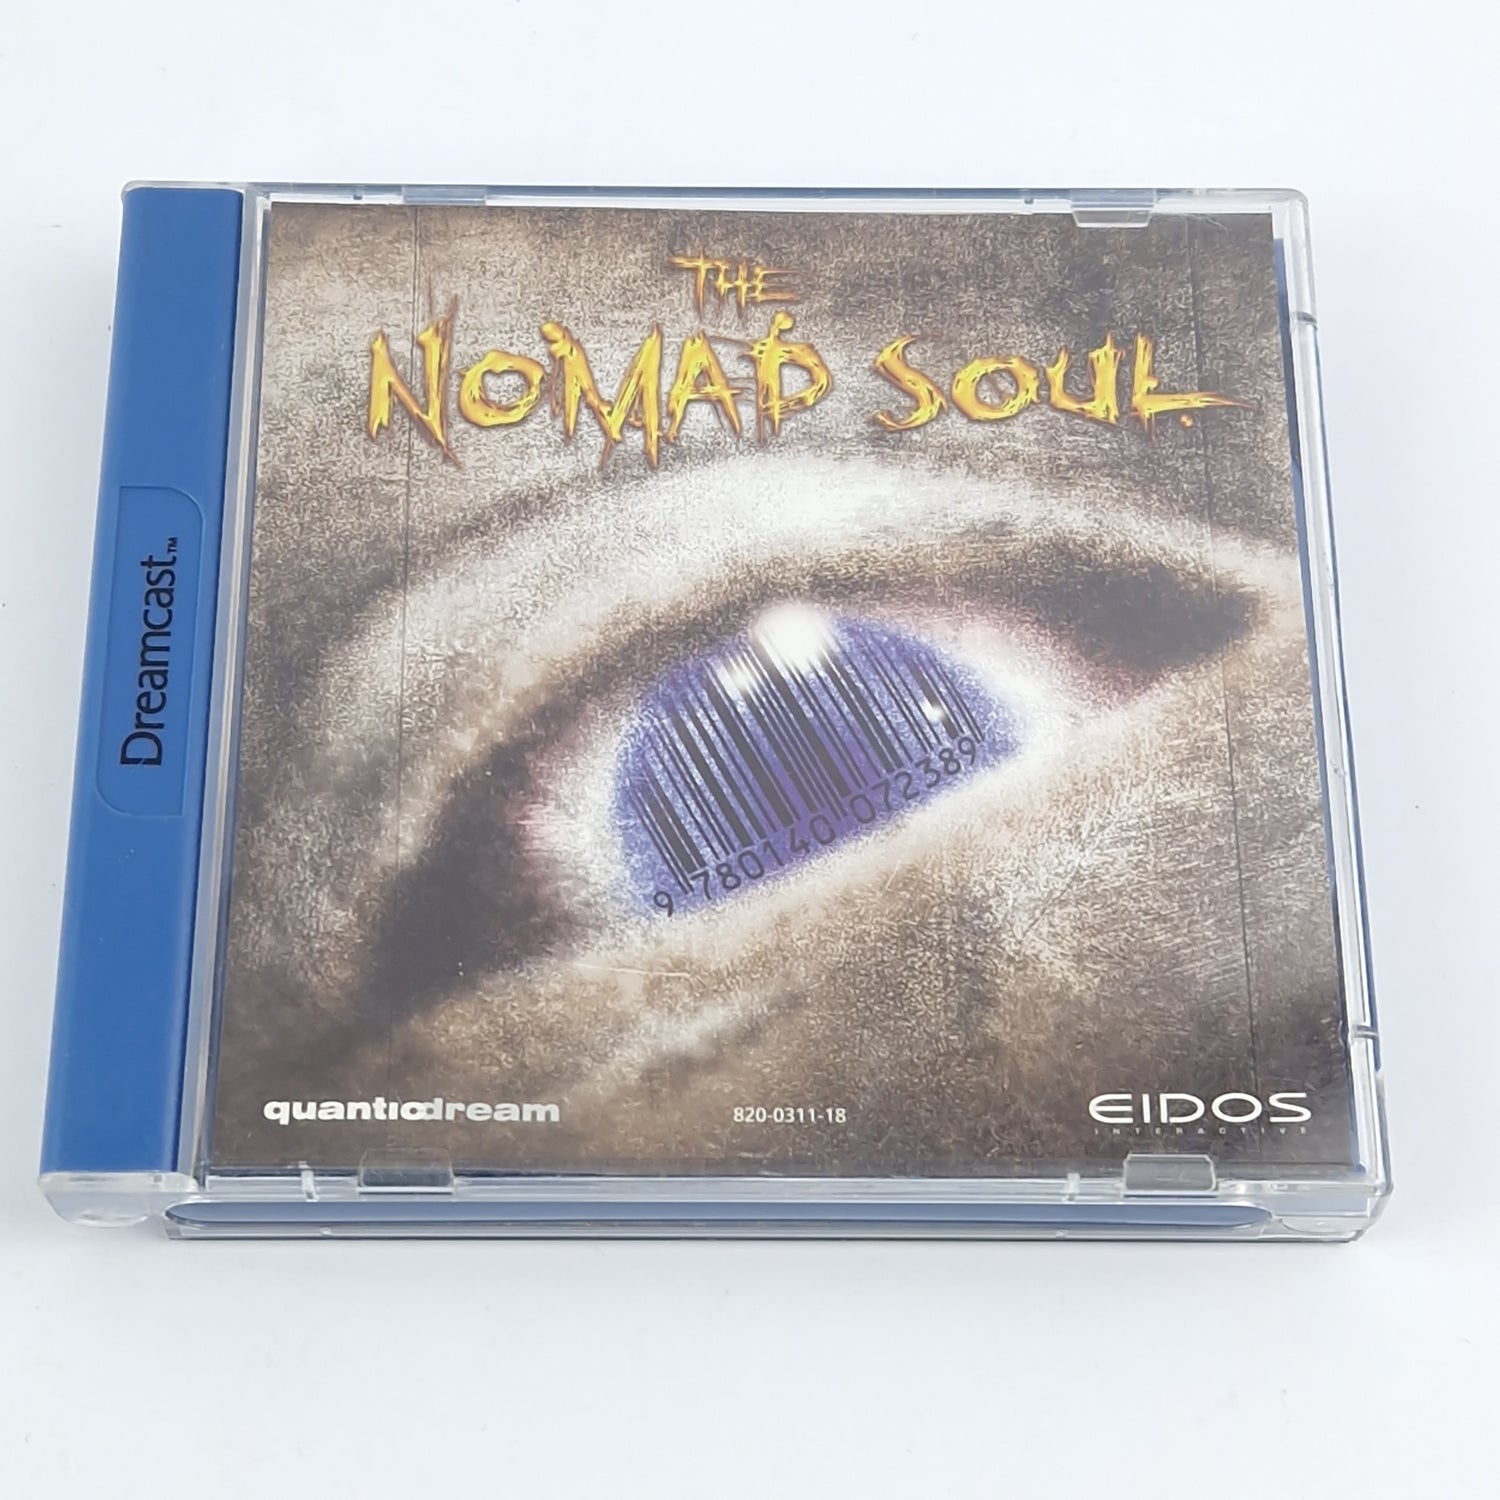 Sega Dreamcast game: The Normad Soul - CD manual OVP cib / DC PAL